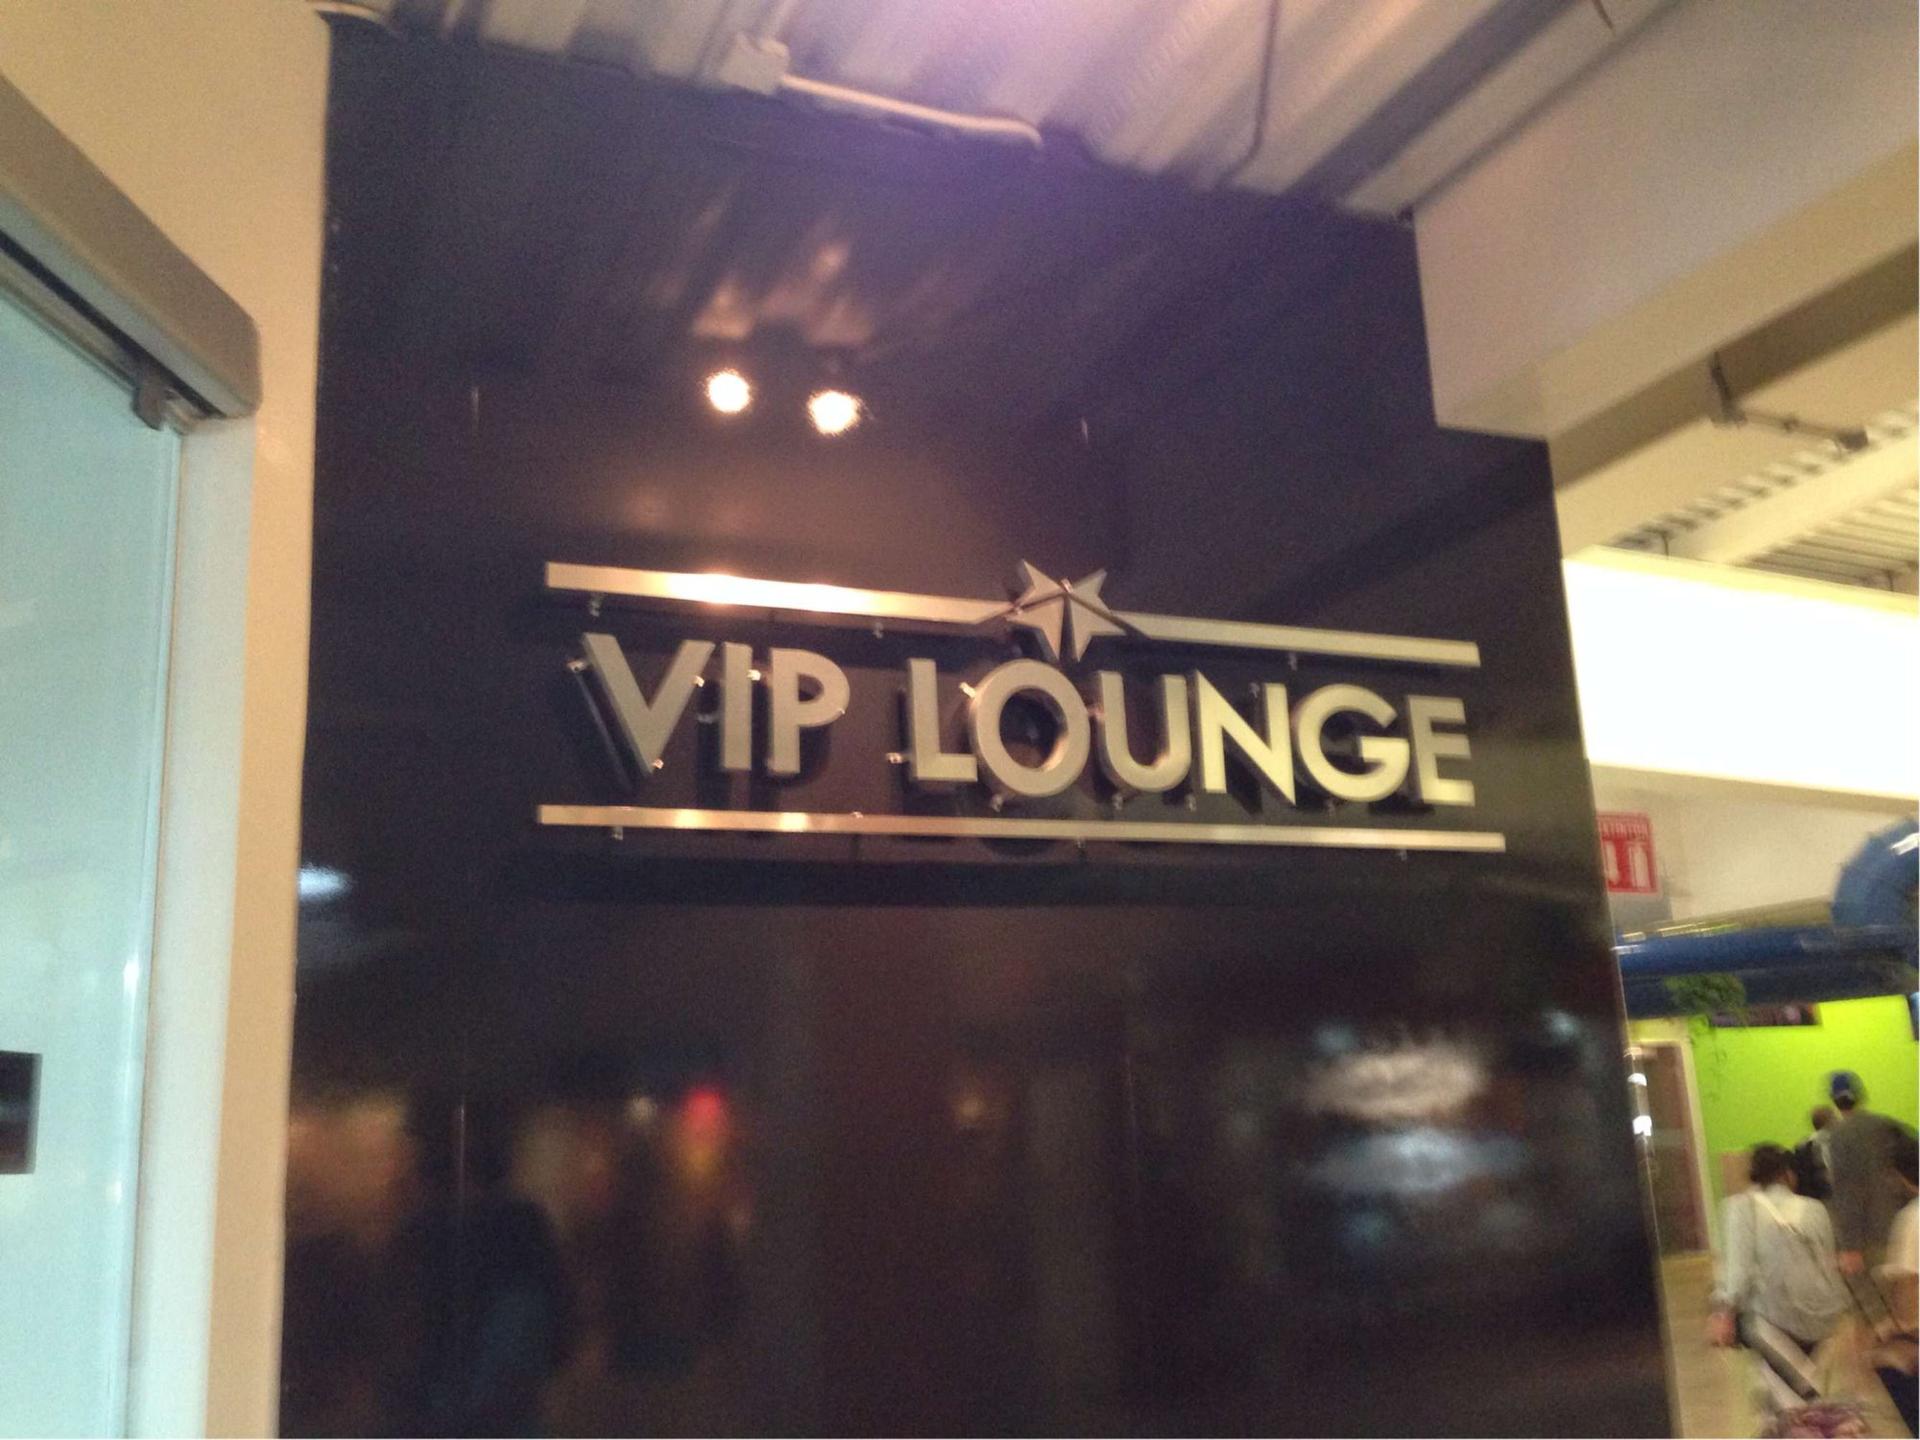 VIP Lounge image 12 of 29